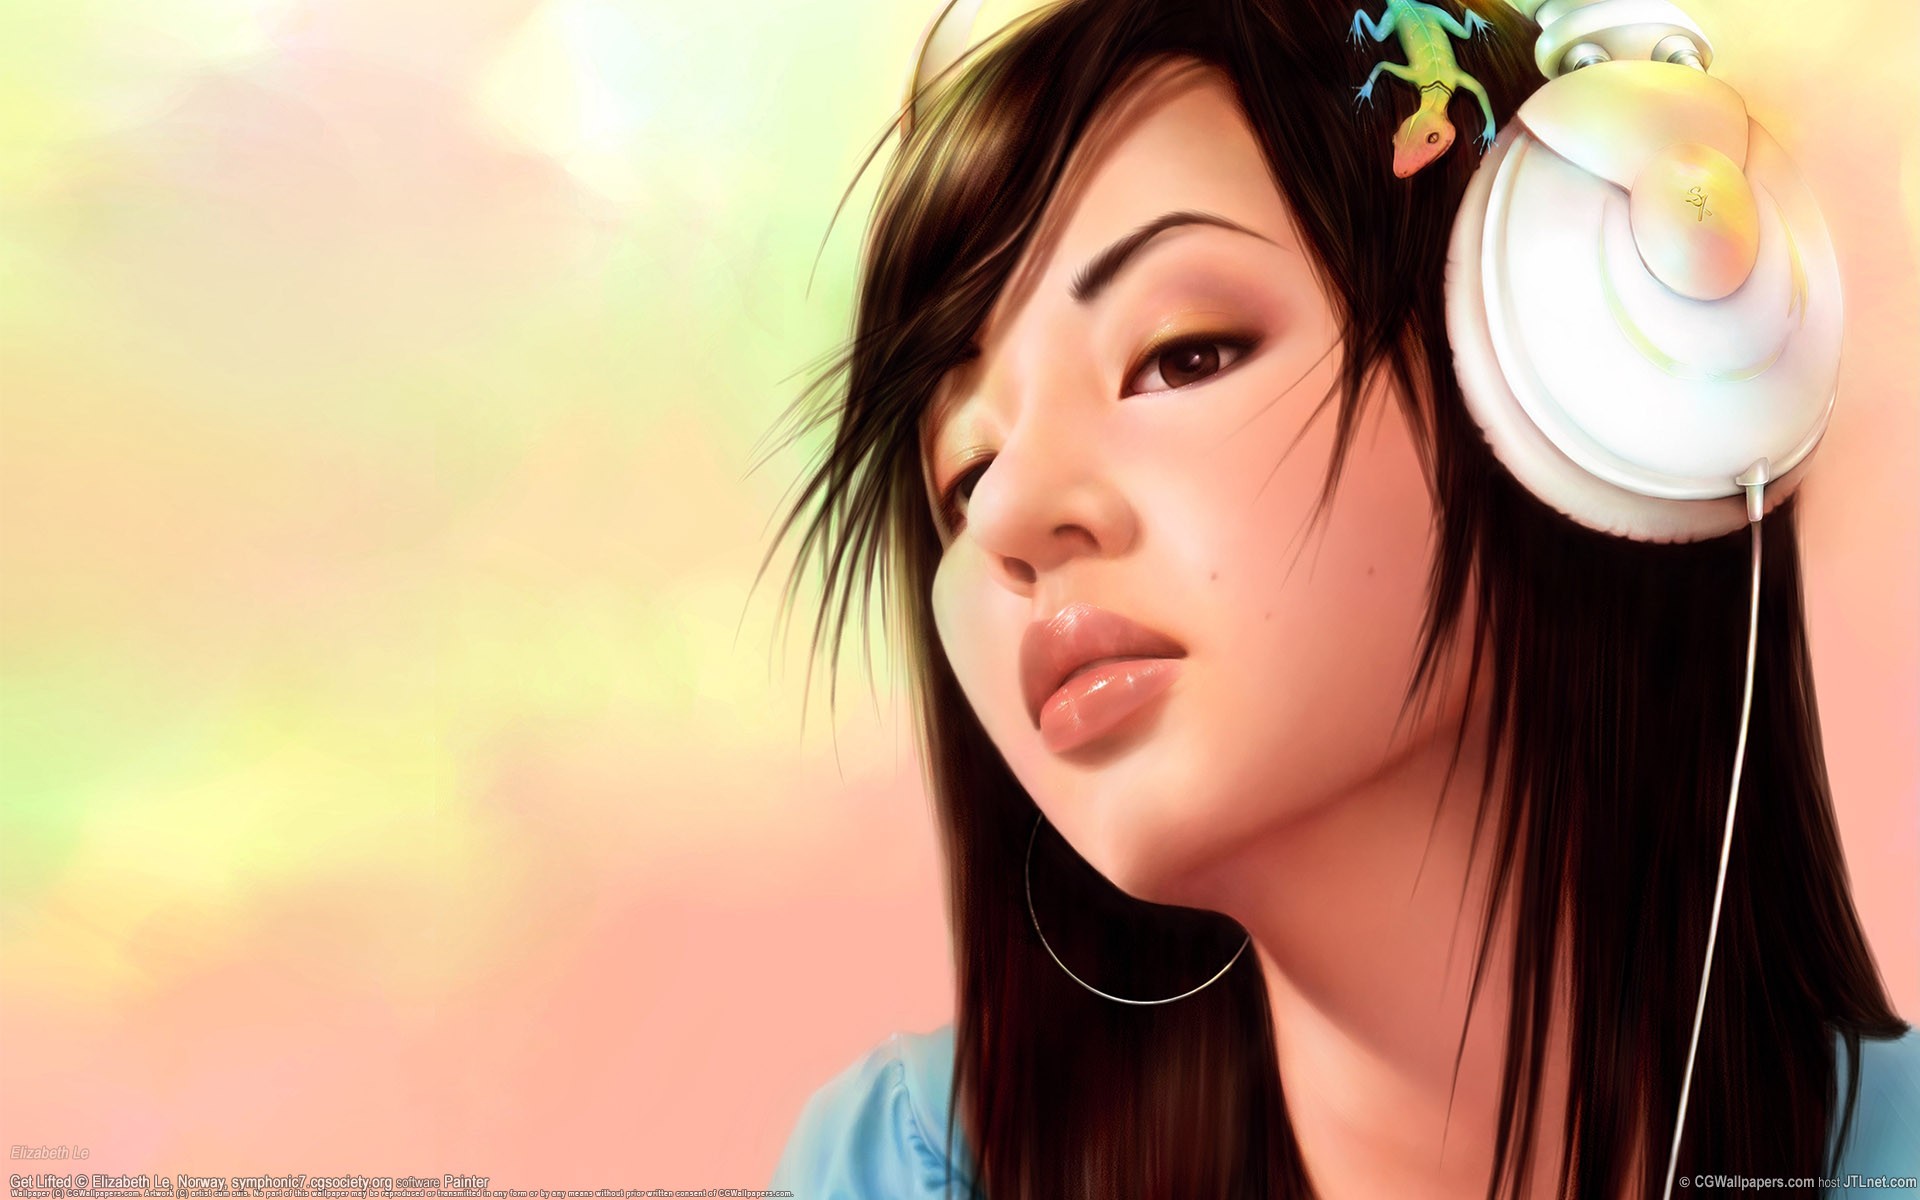 General 1920x1200 headphones women artwork digital art brunette simple background CGI face closeup